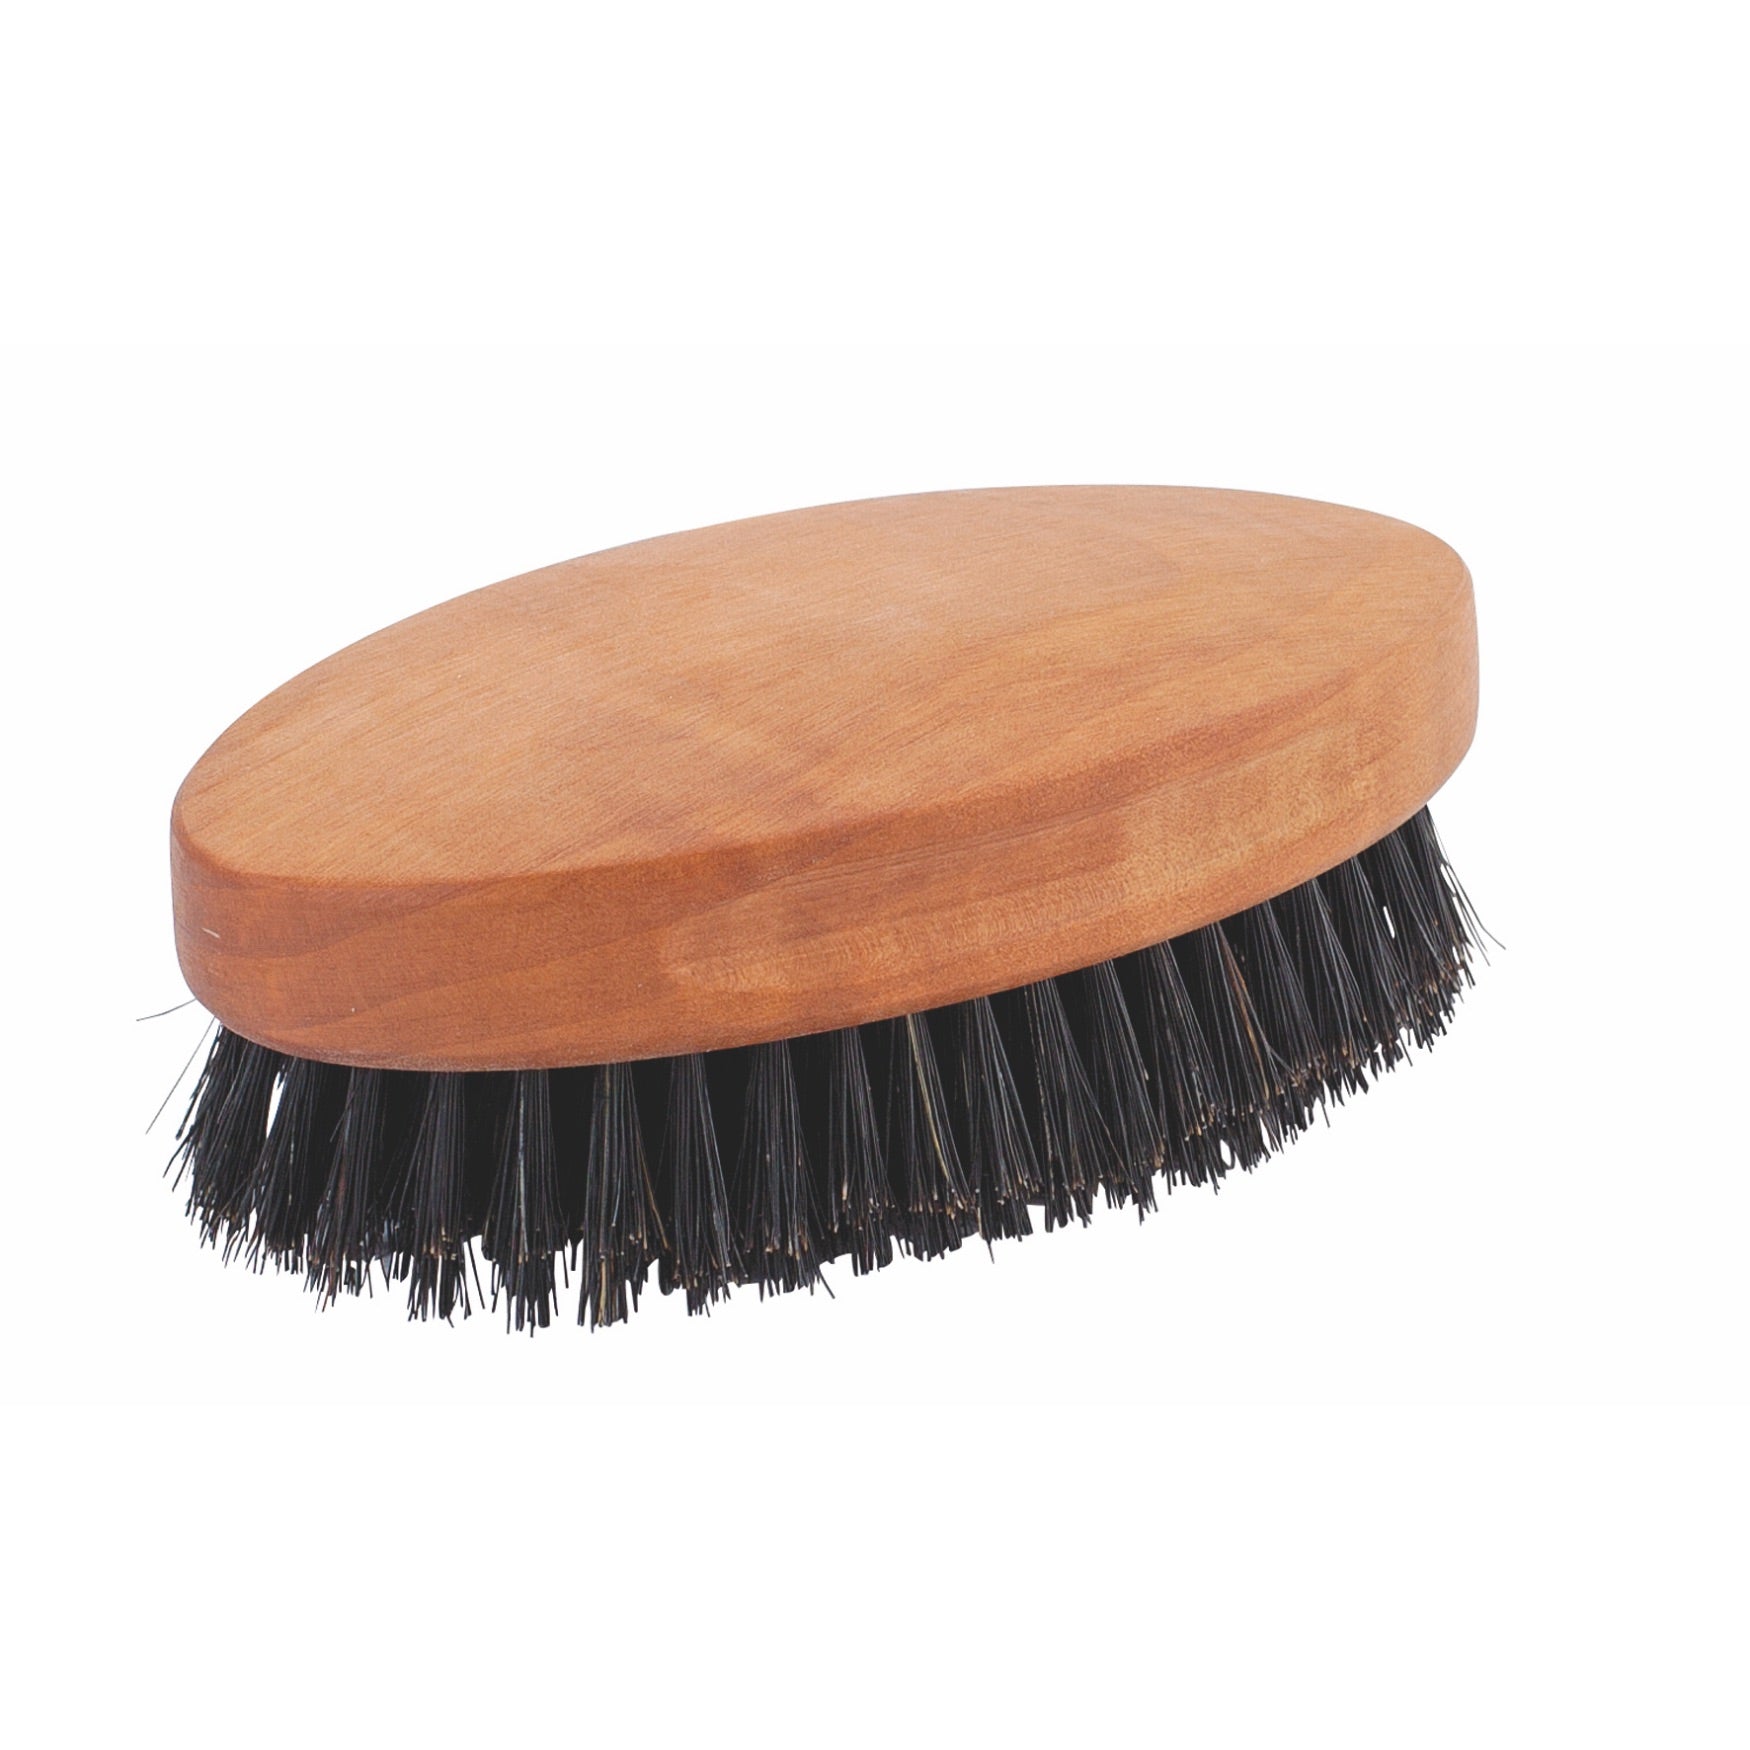 Wooden Men's Hairbrush, Black Bristle, Oxford Brush Company Burford – The  Oxford Brush Company